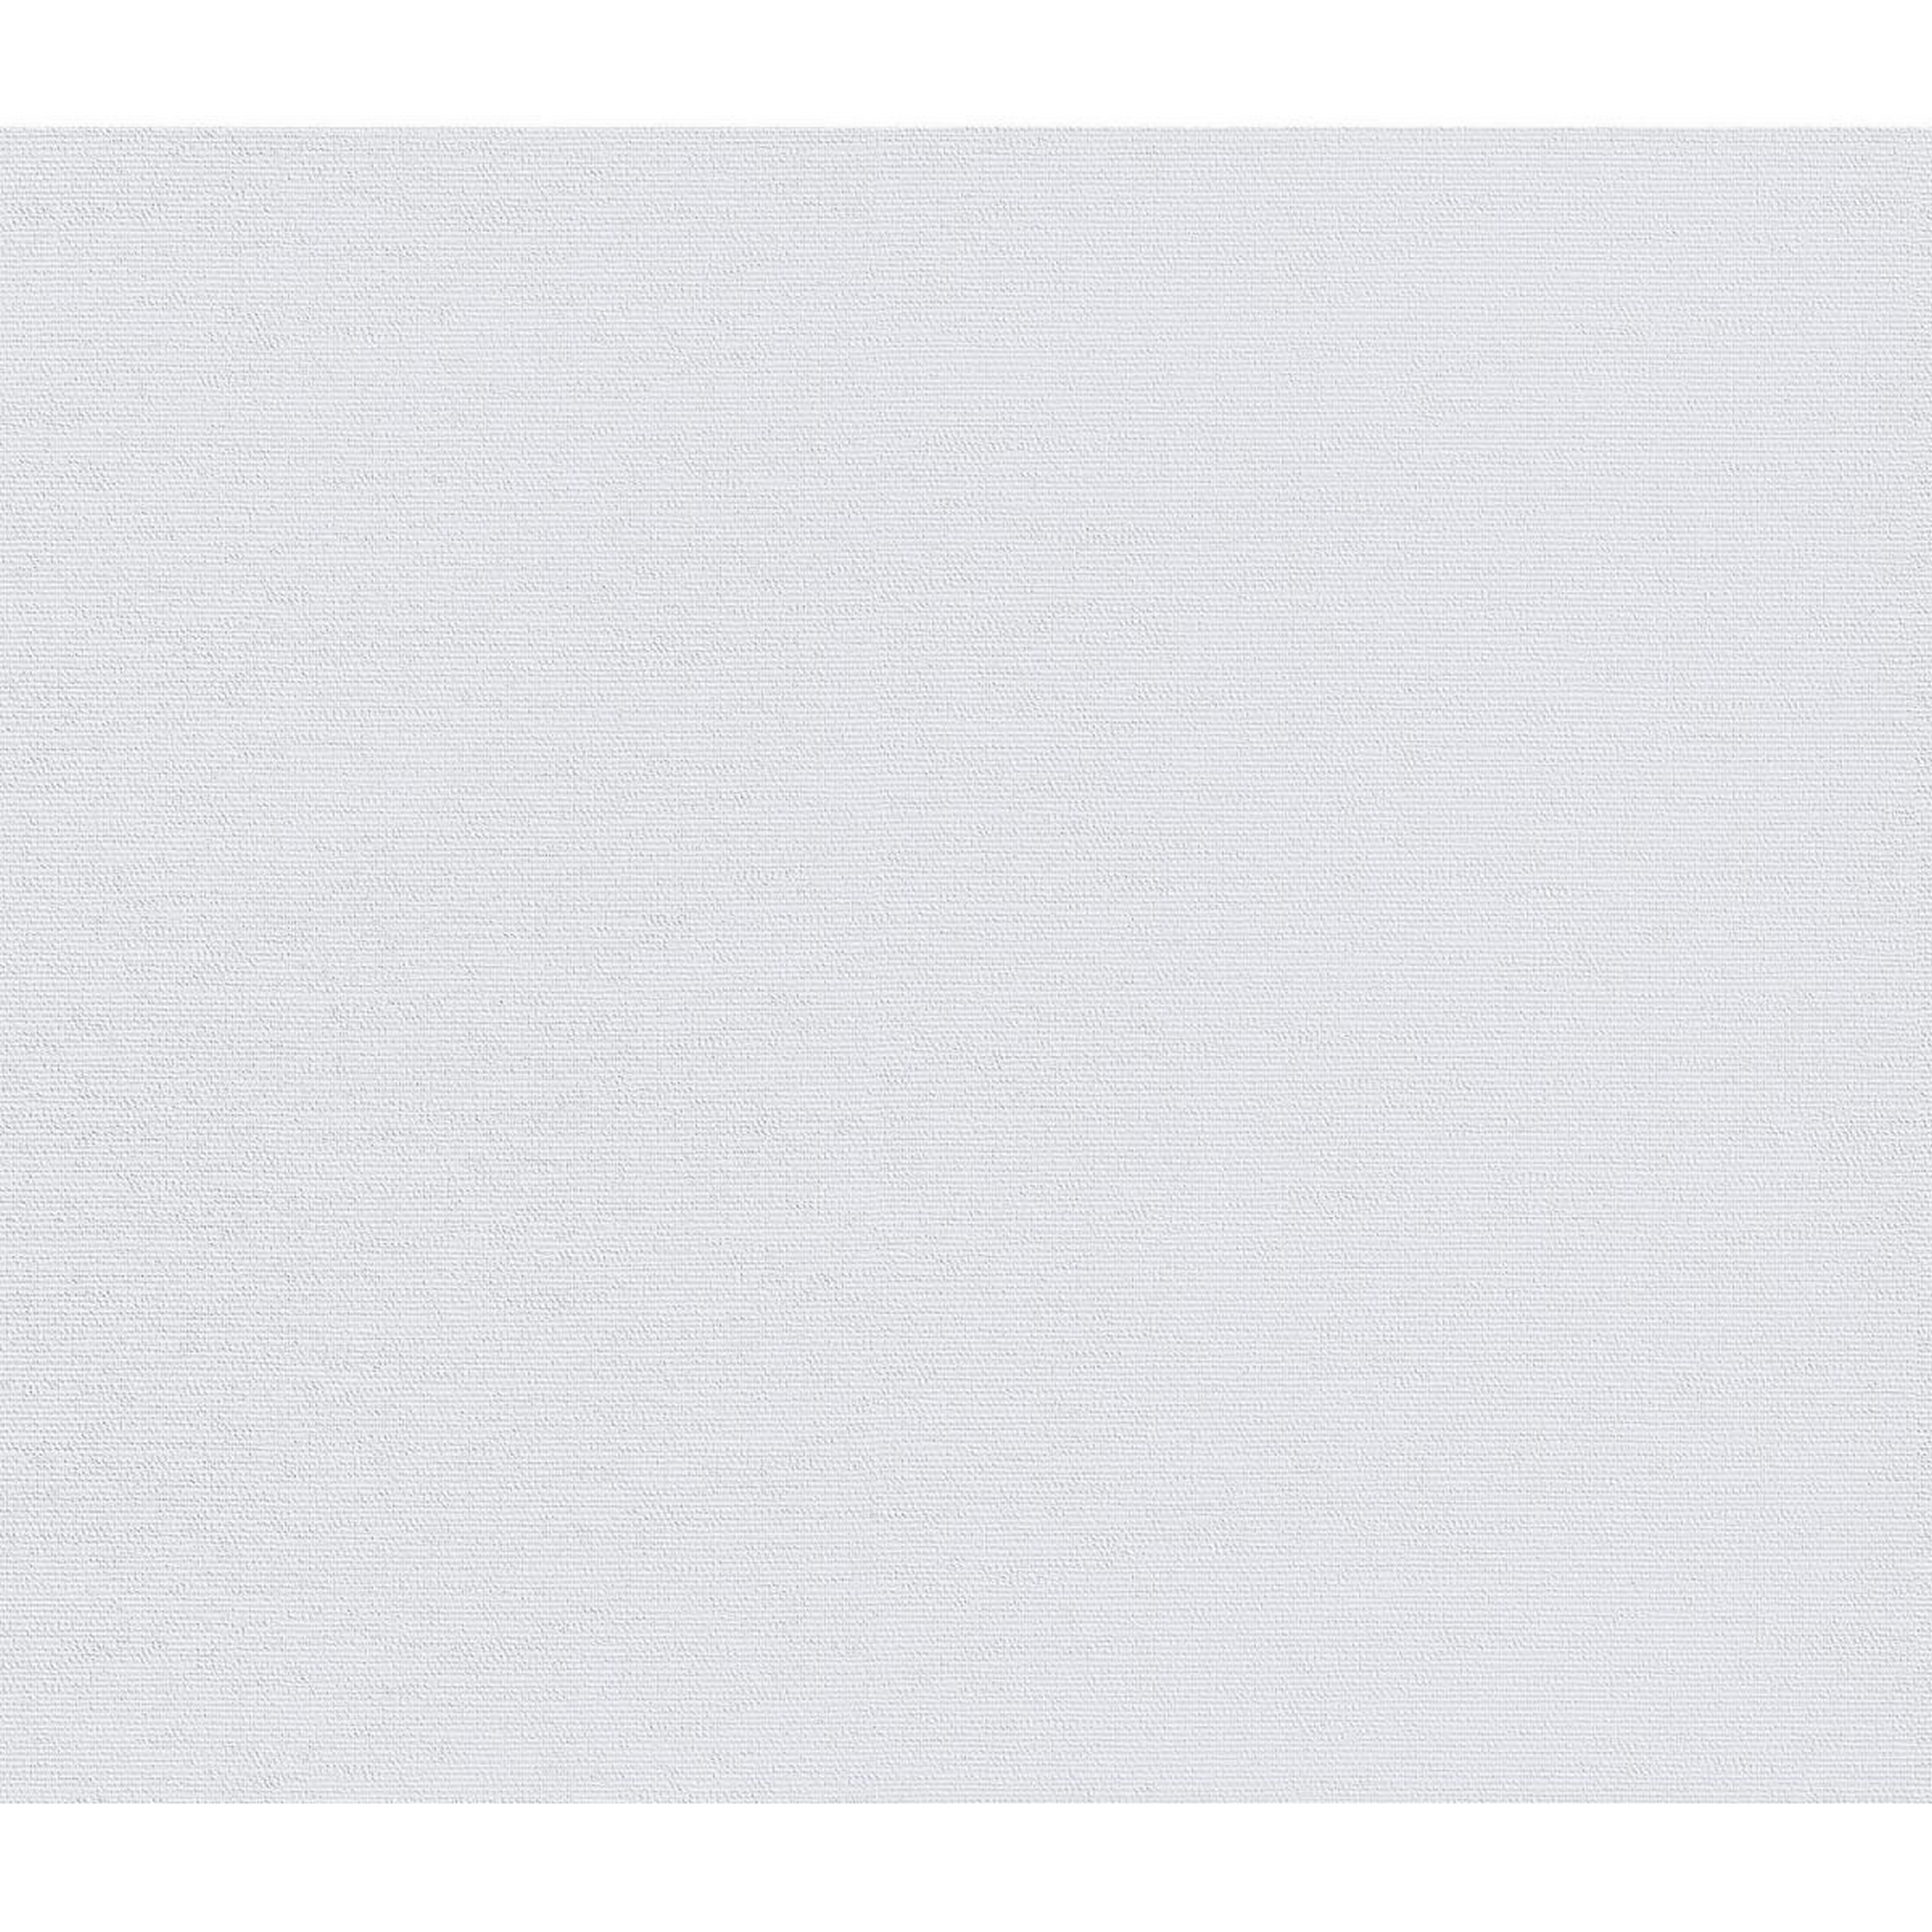 Vliestapete 'Maxx Economy Flax 100' weiß 0,53 x 12,5 m + product picture